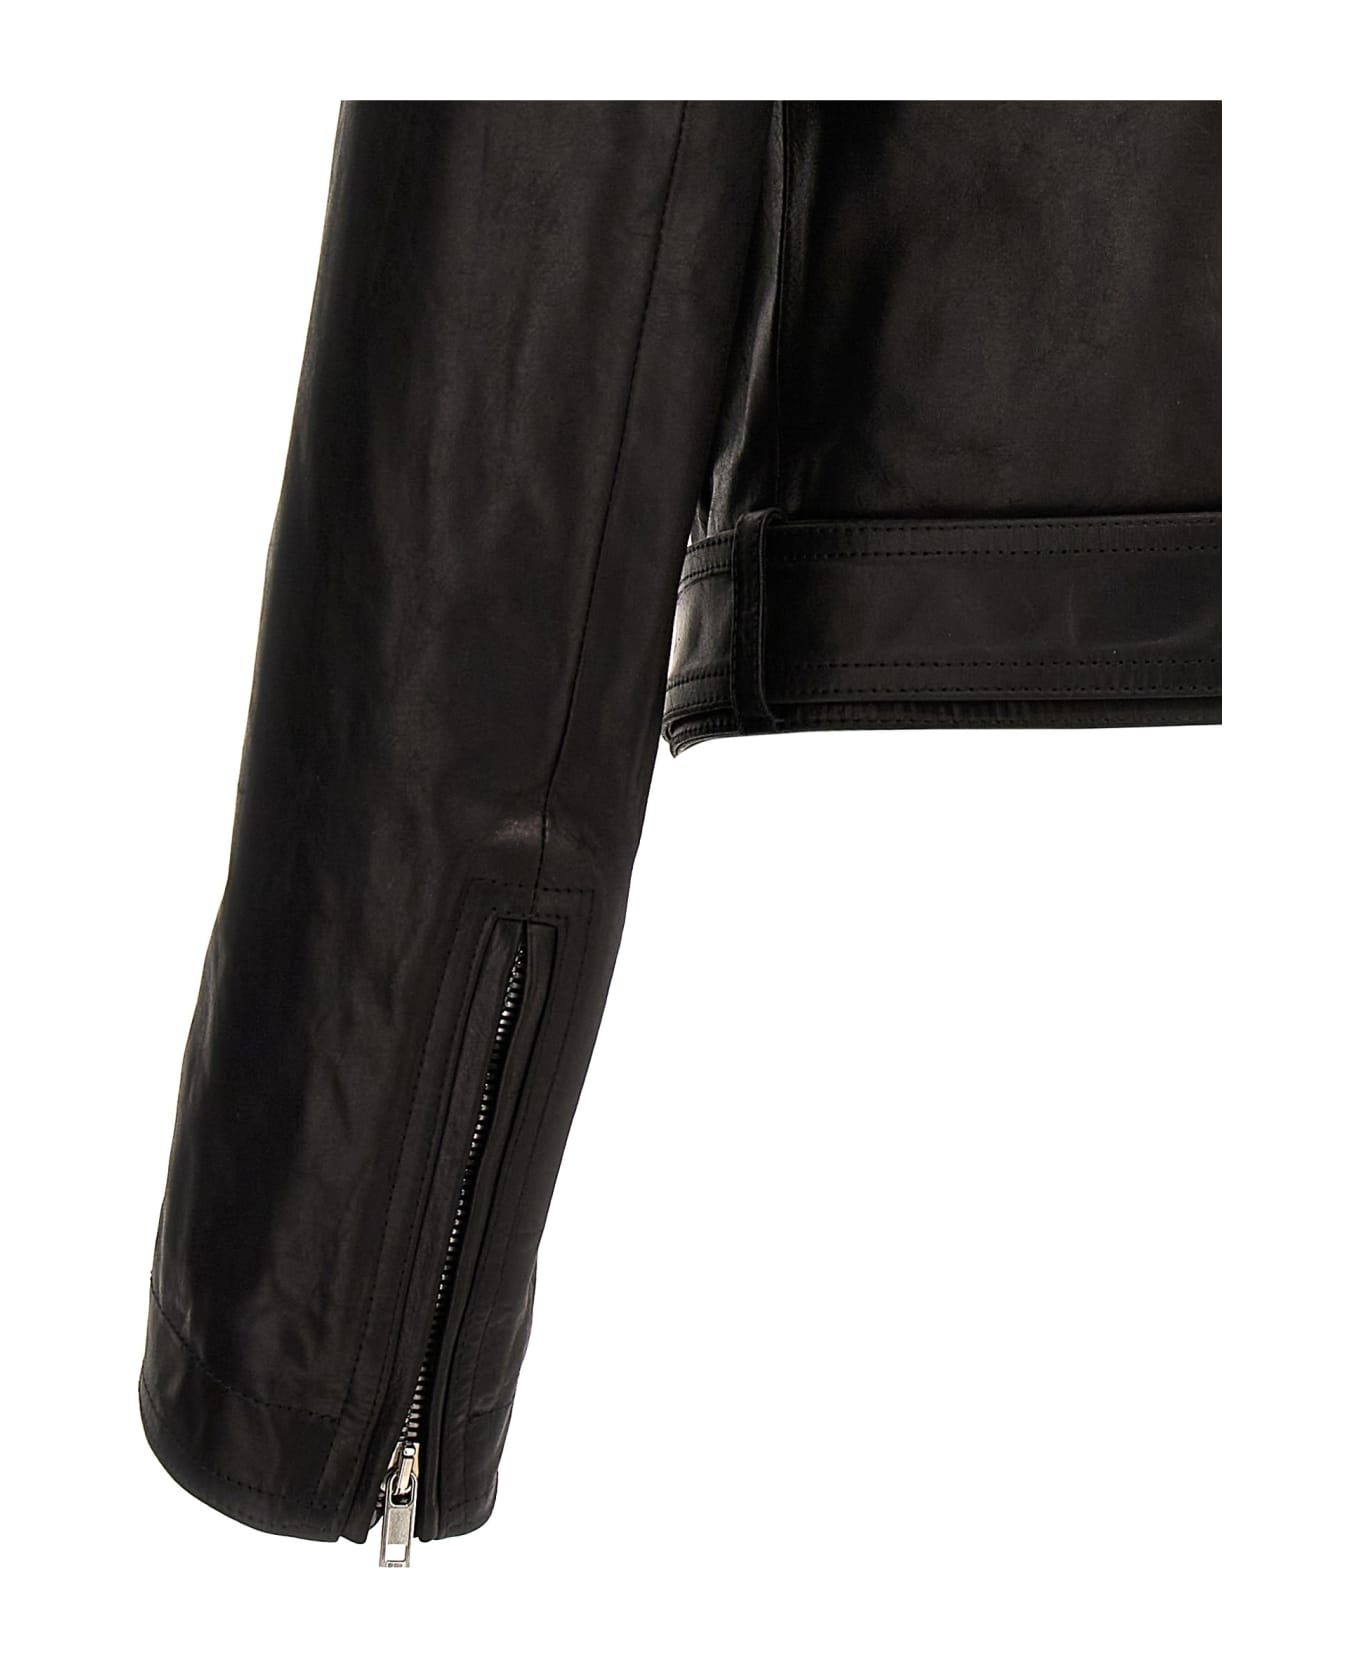 Rick Owens Leather Biker Jacket - Black